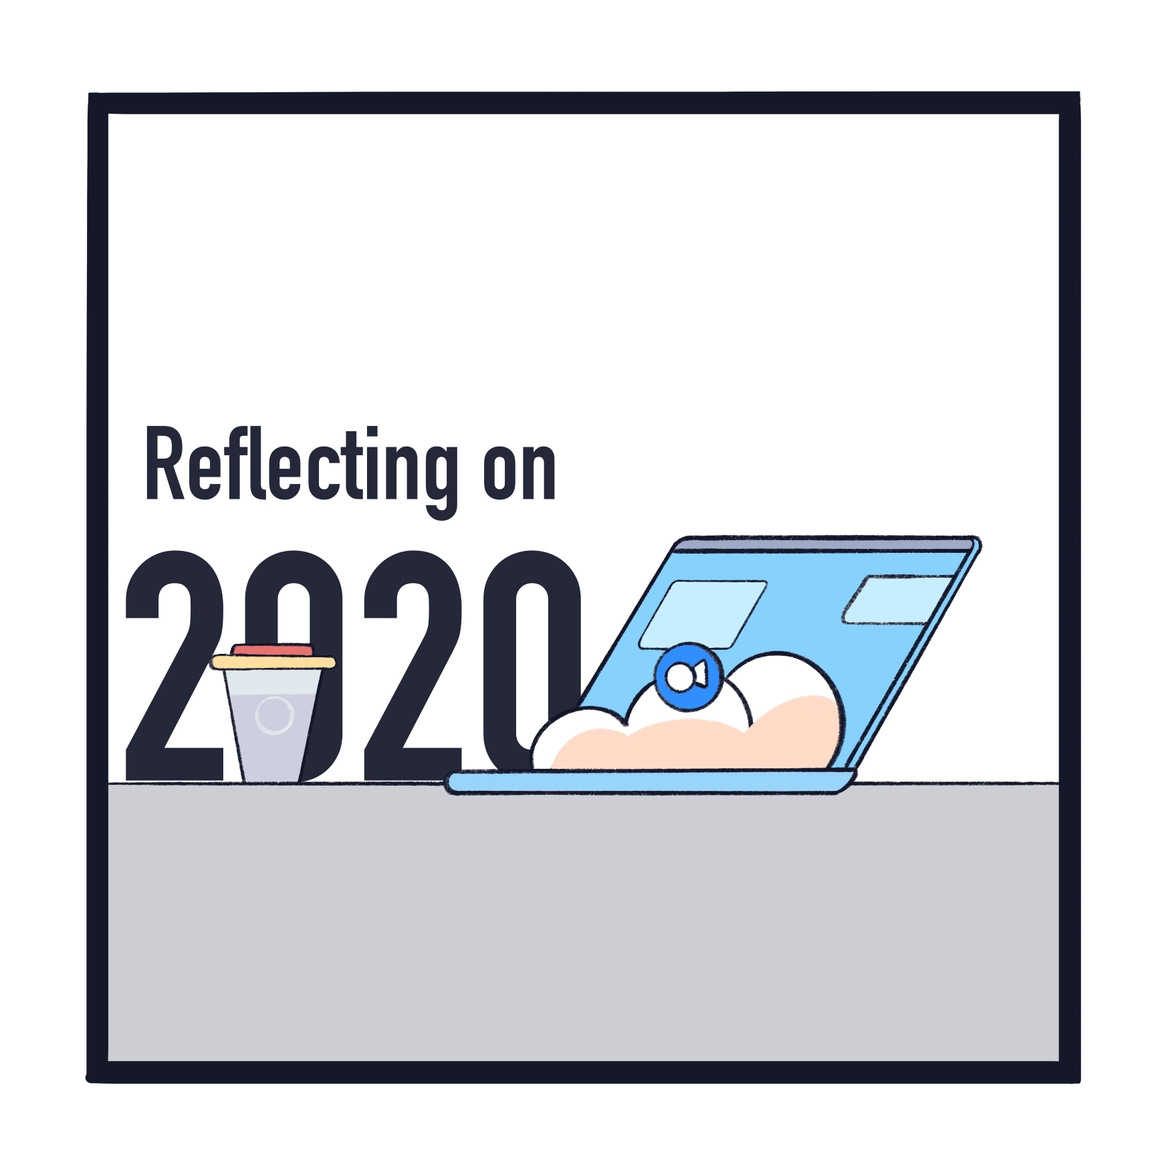 Reflecting on 2020